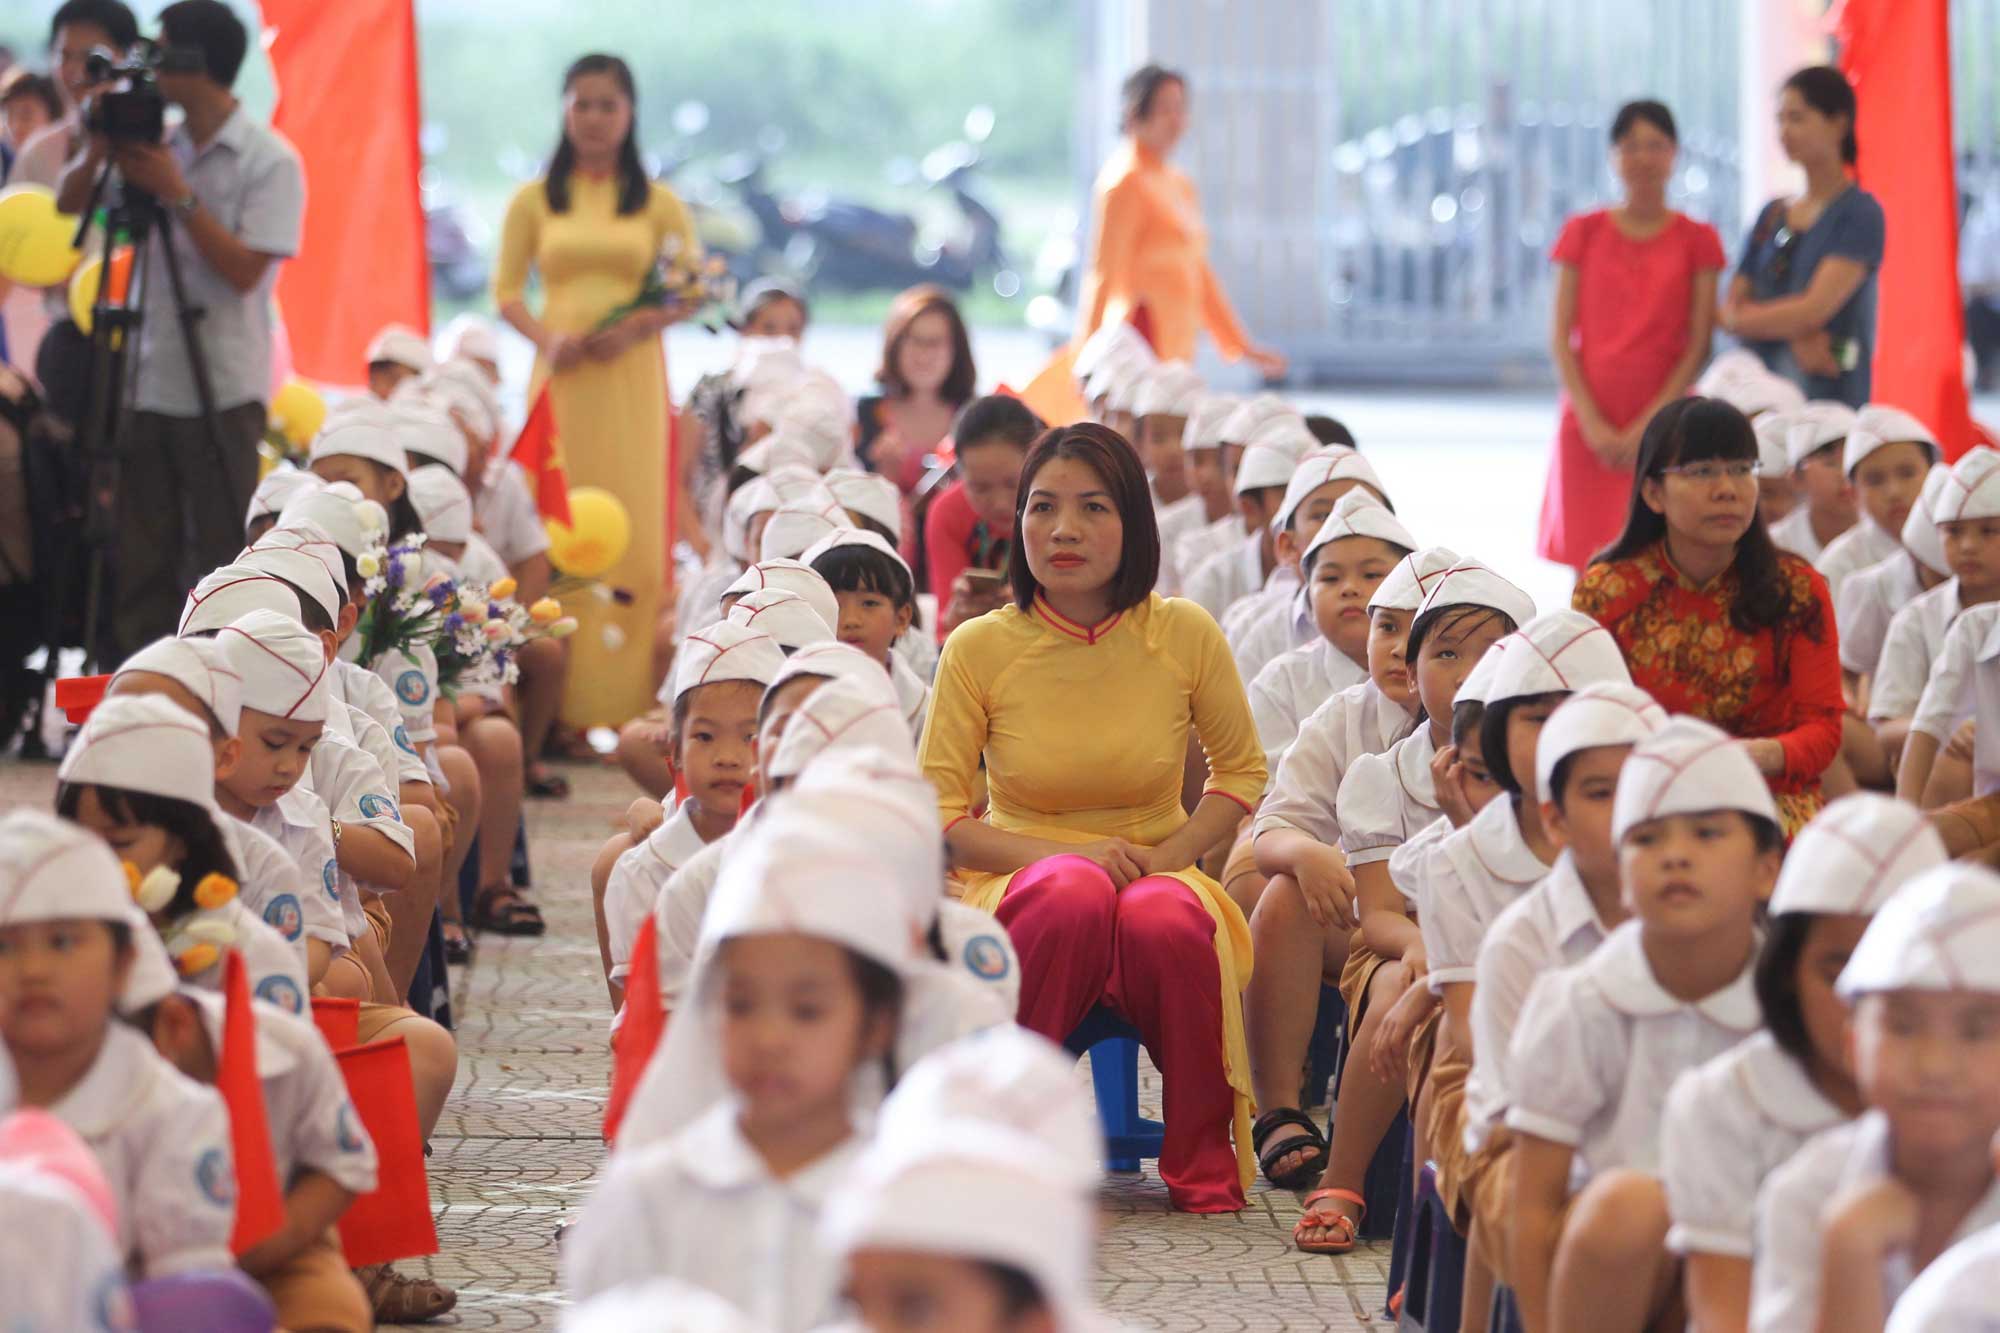 School children in uniforms assemble with their teachers